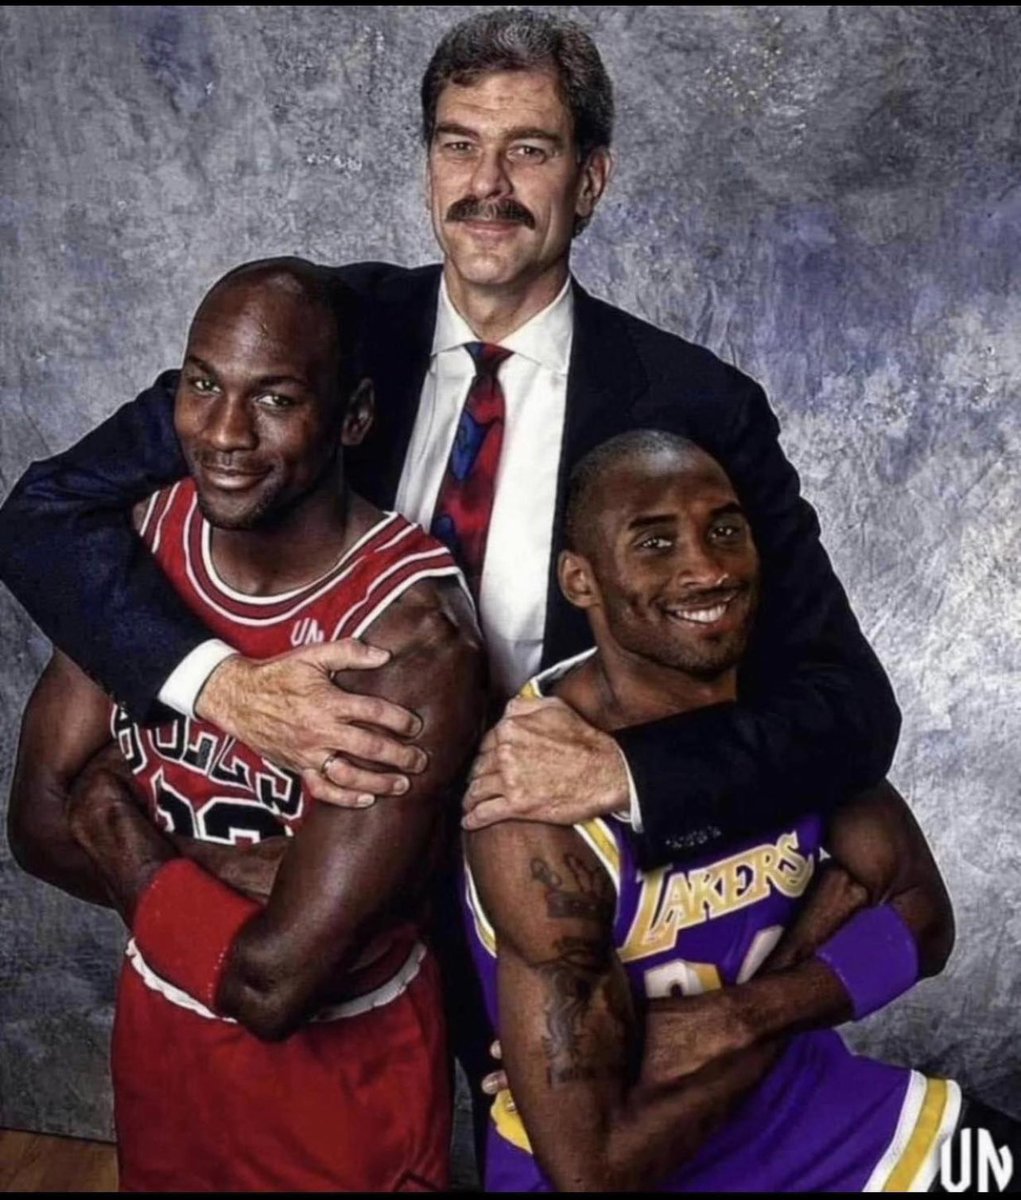 Phil Jackson coached the Top 2 players in NBA history

#Bulls Michael Jordan & #Lakers Kobe Bryant